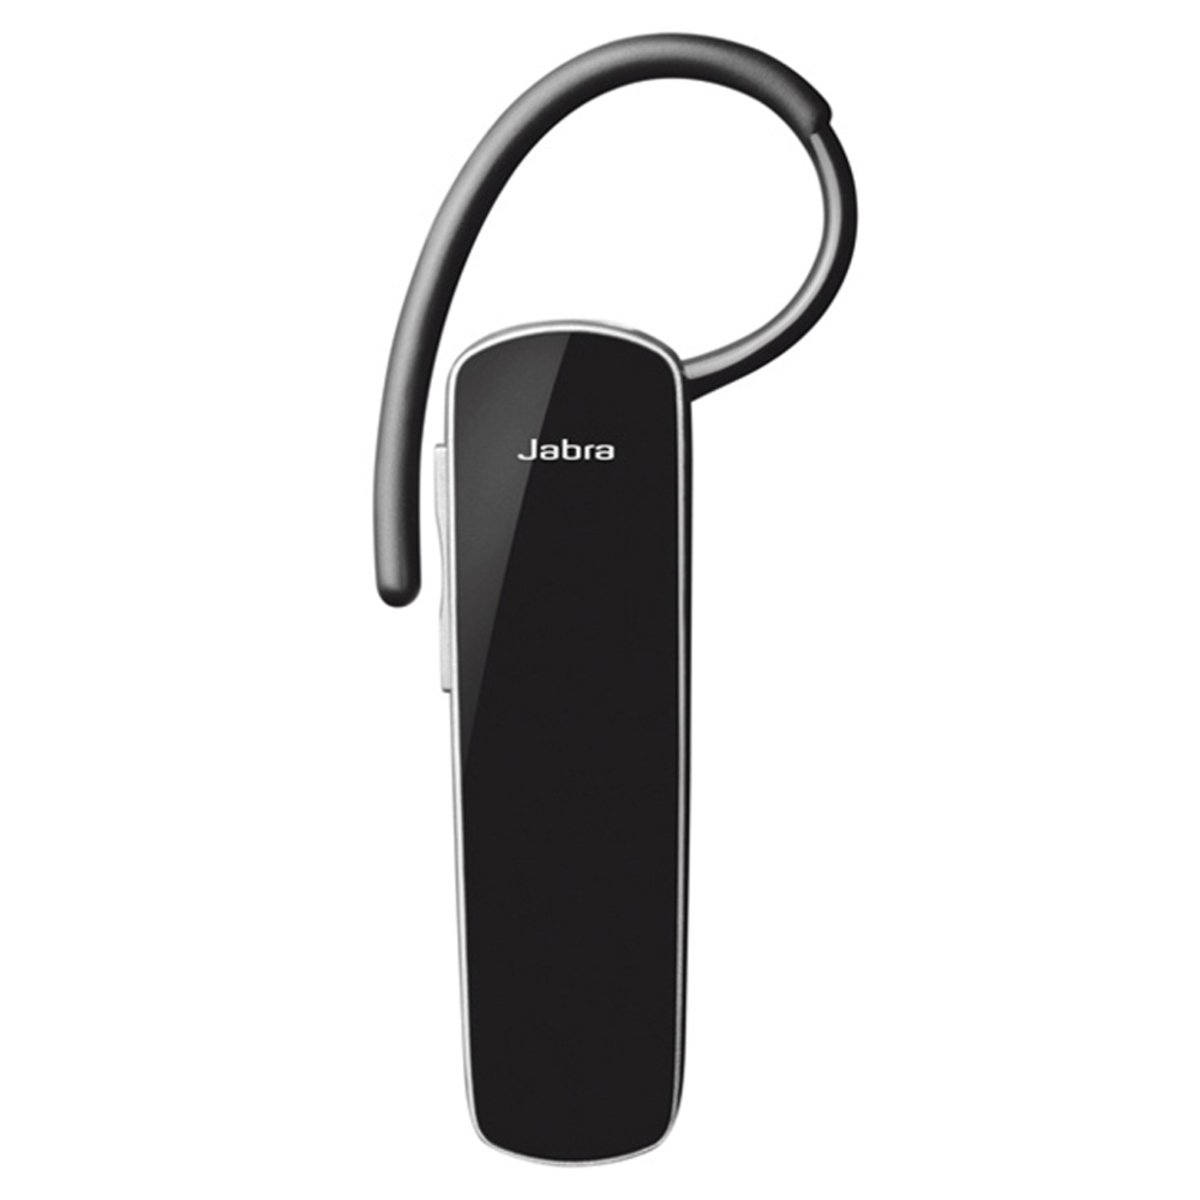 Jabra Bluetooth Headset EasyGo Black